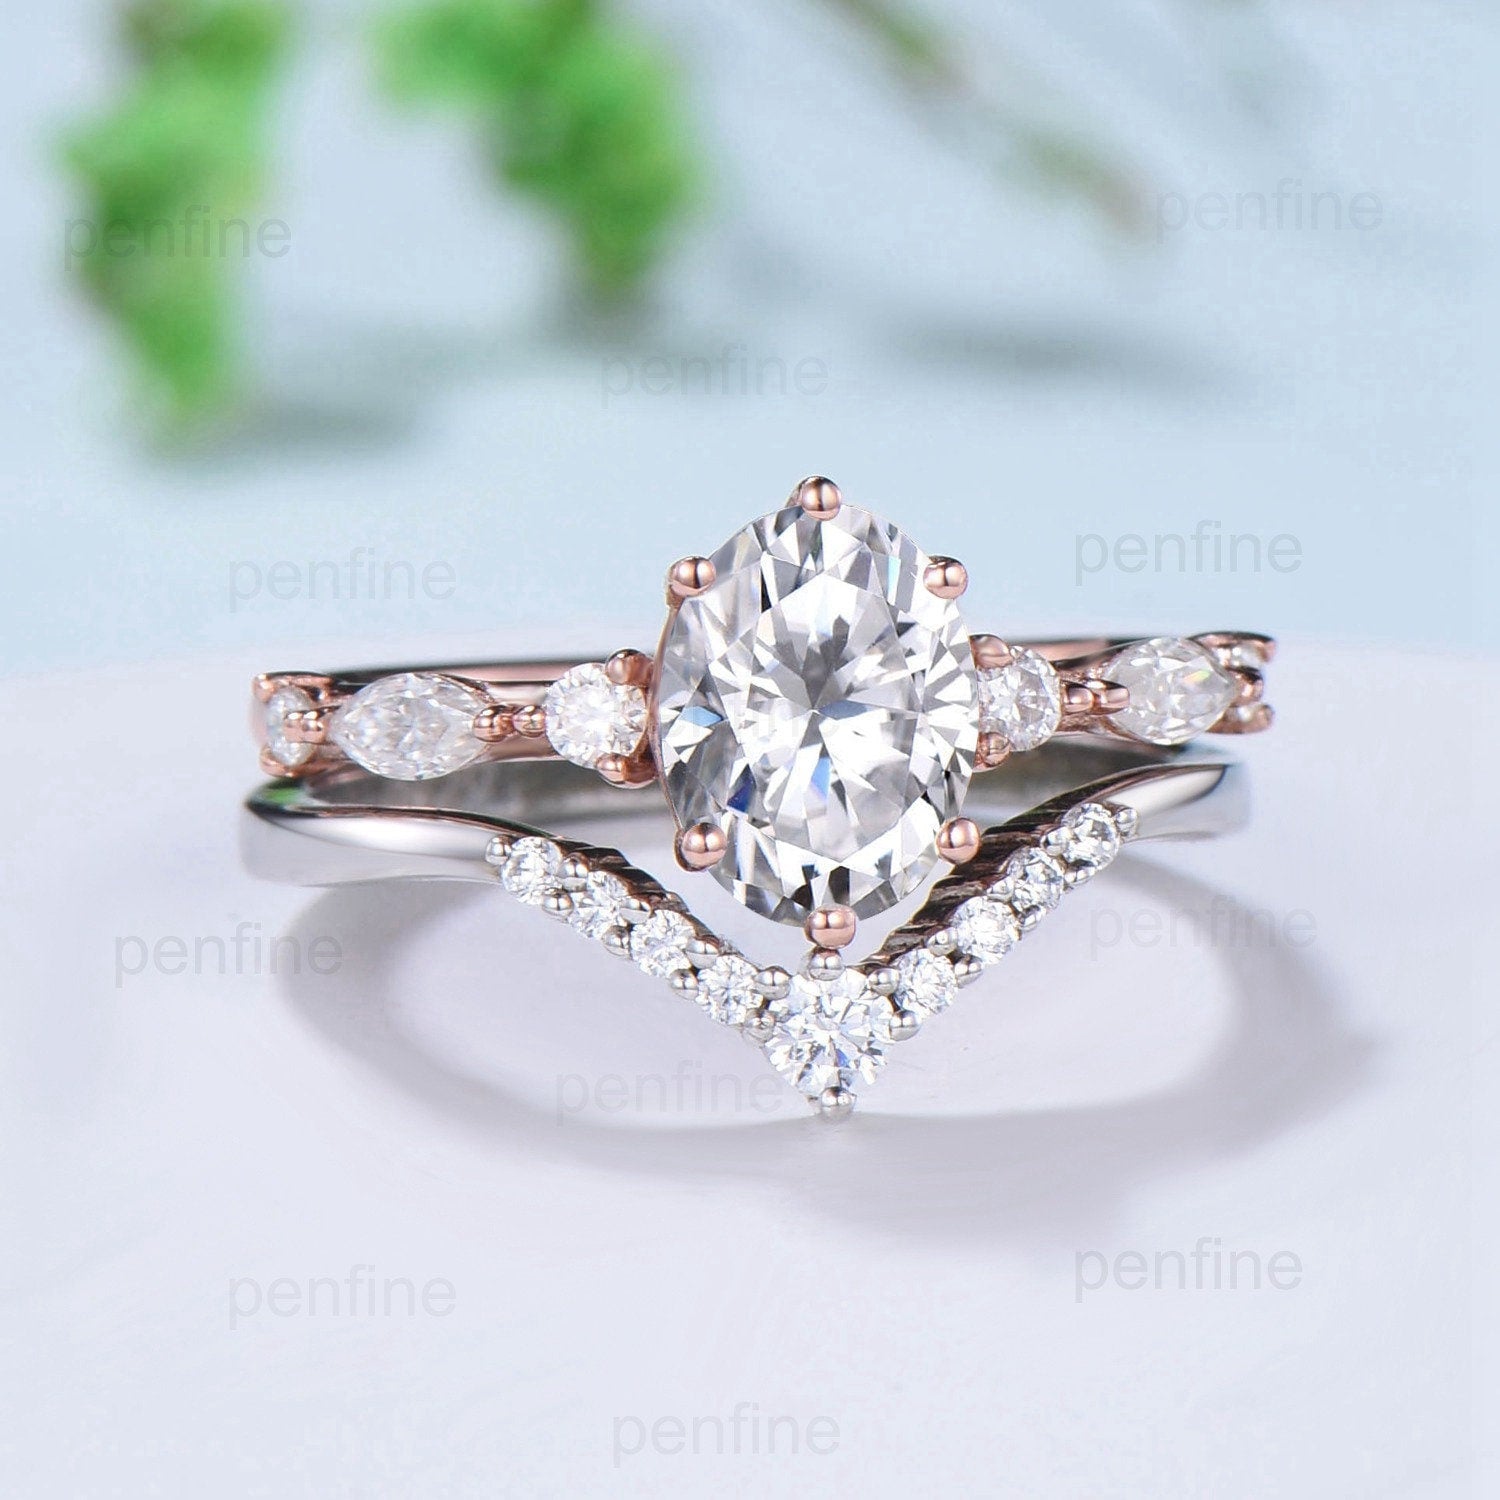 Vintage 1.5Ct Oval Moissanite engagement ring set seven stone moissanite diamond wedding ring set curved stacking band Bridal Promise ring - PENFINE